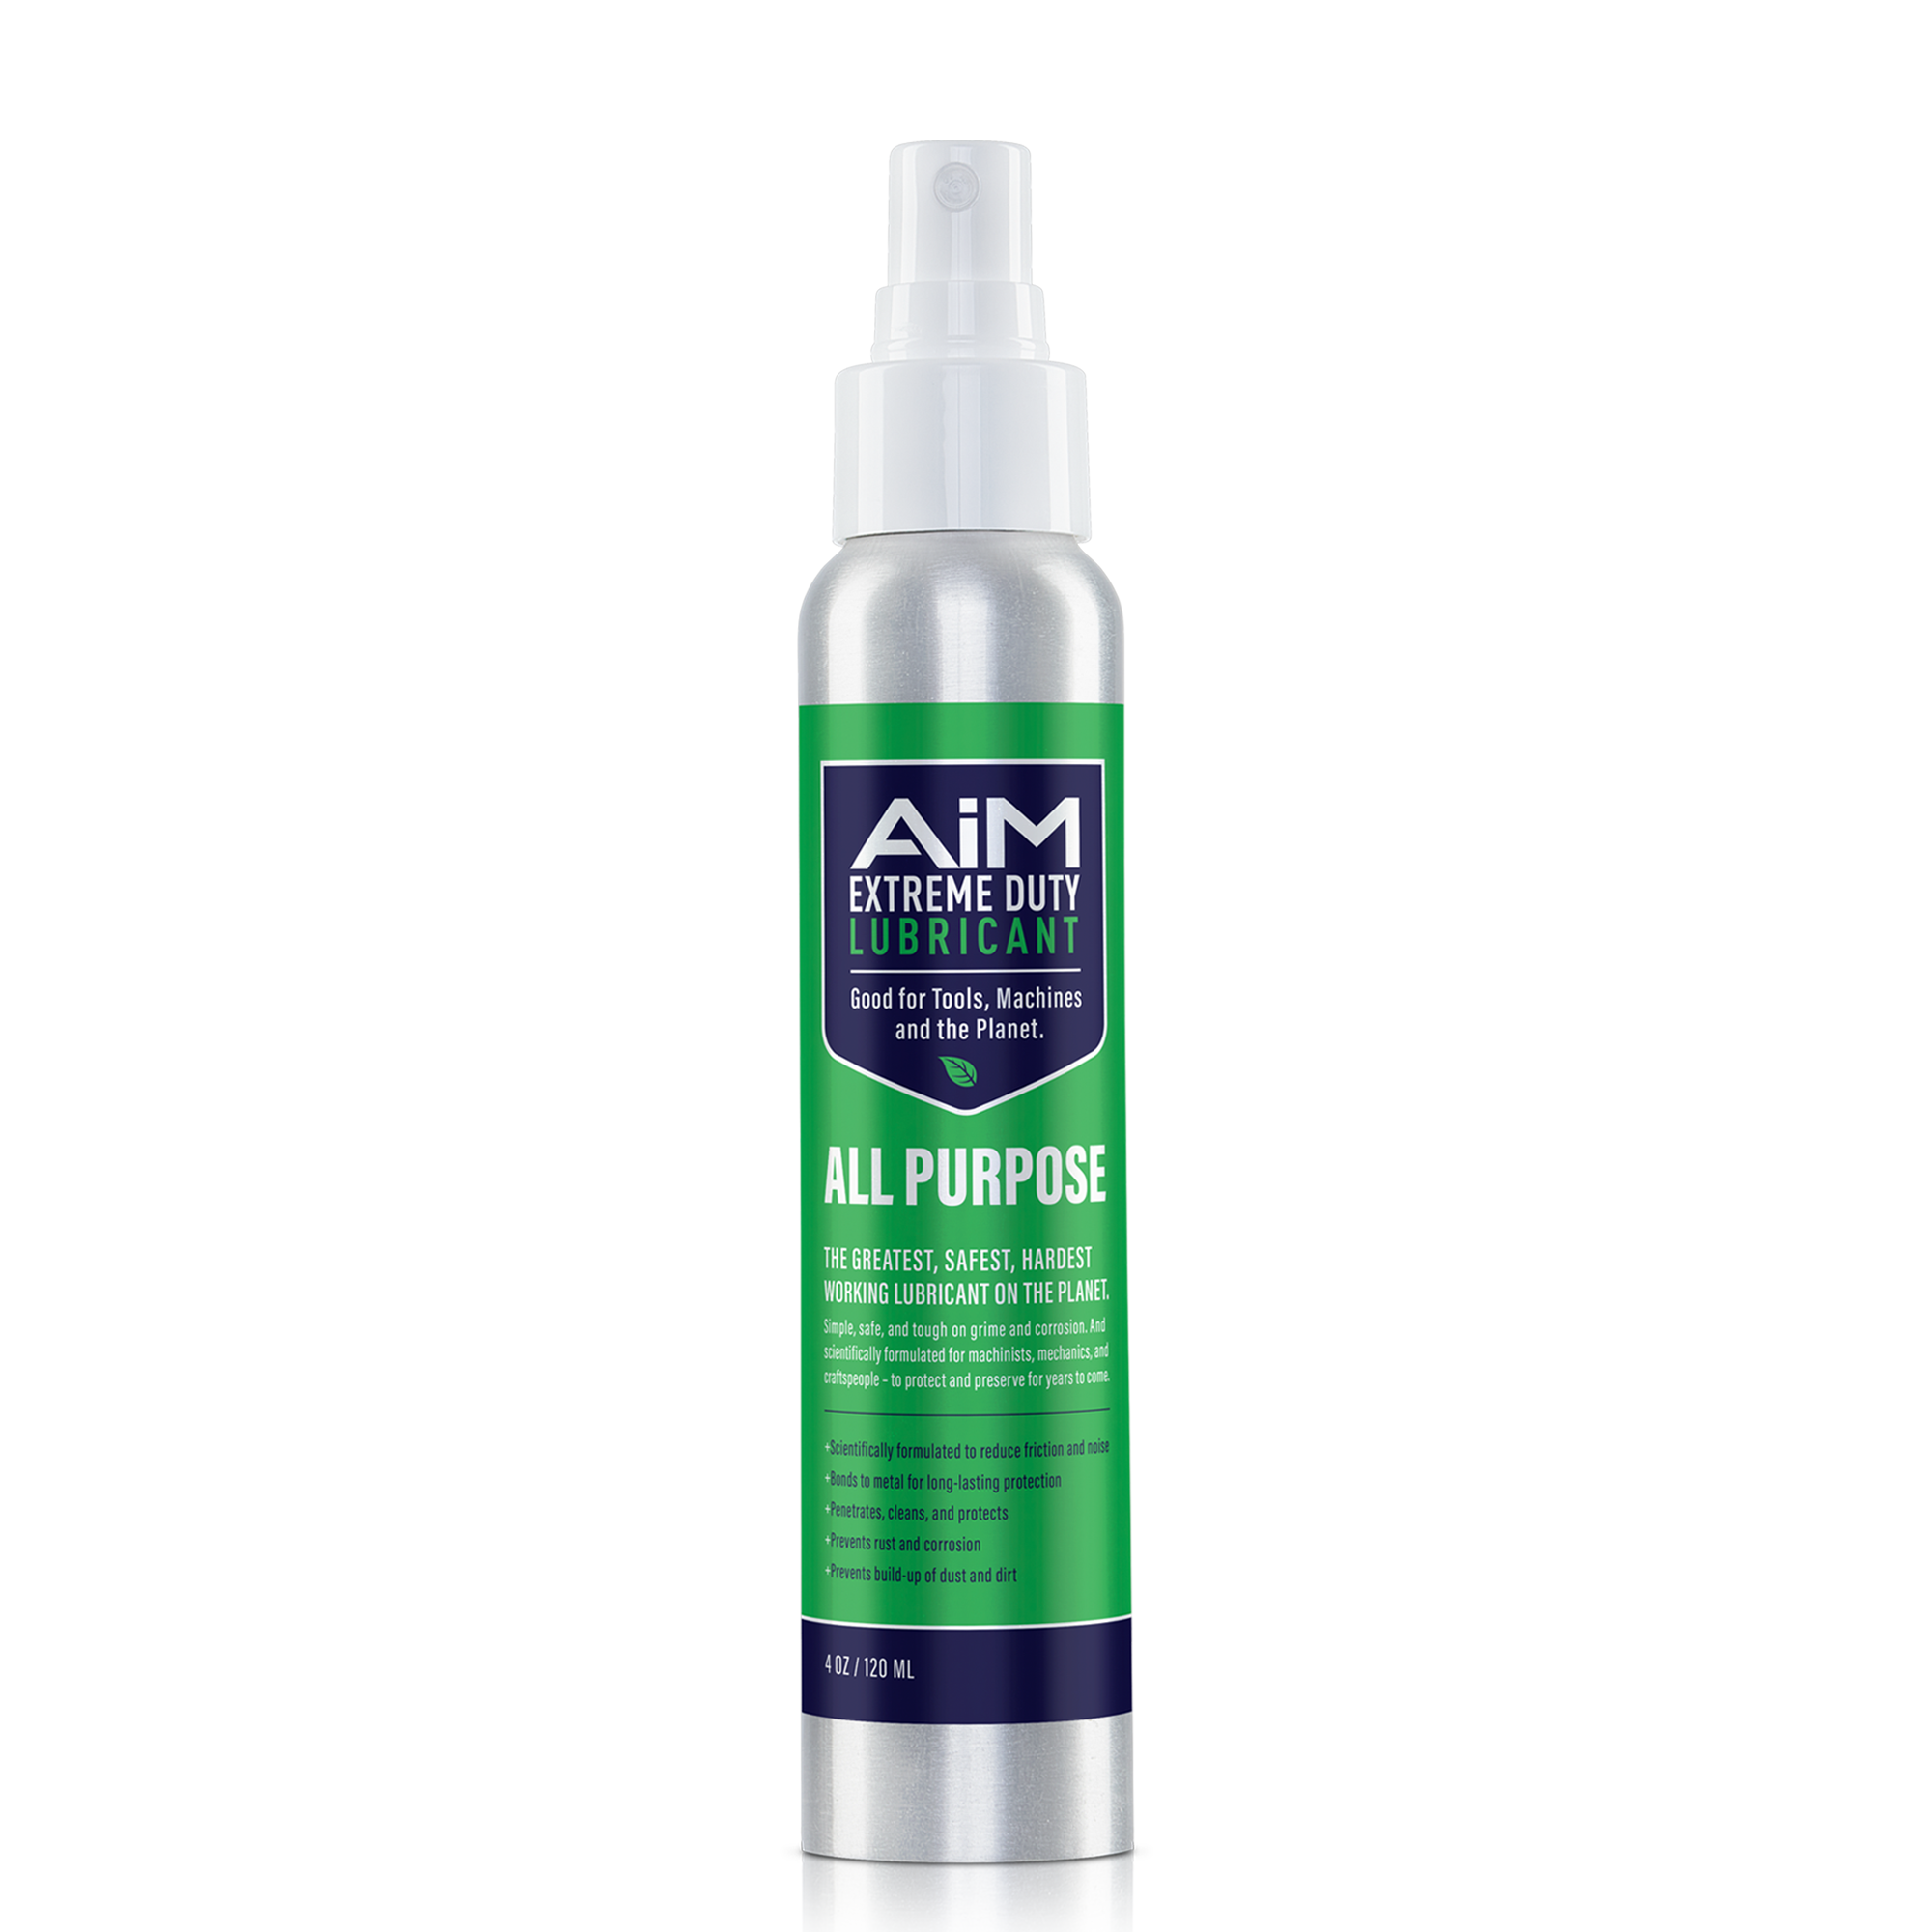 AiM Extreme Duty Lubricant | All Purpose | 4oz sprayer